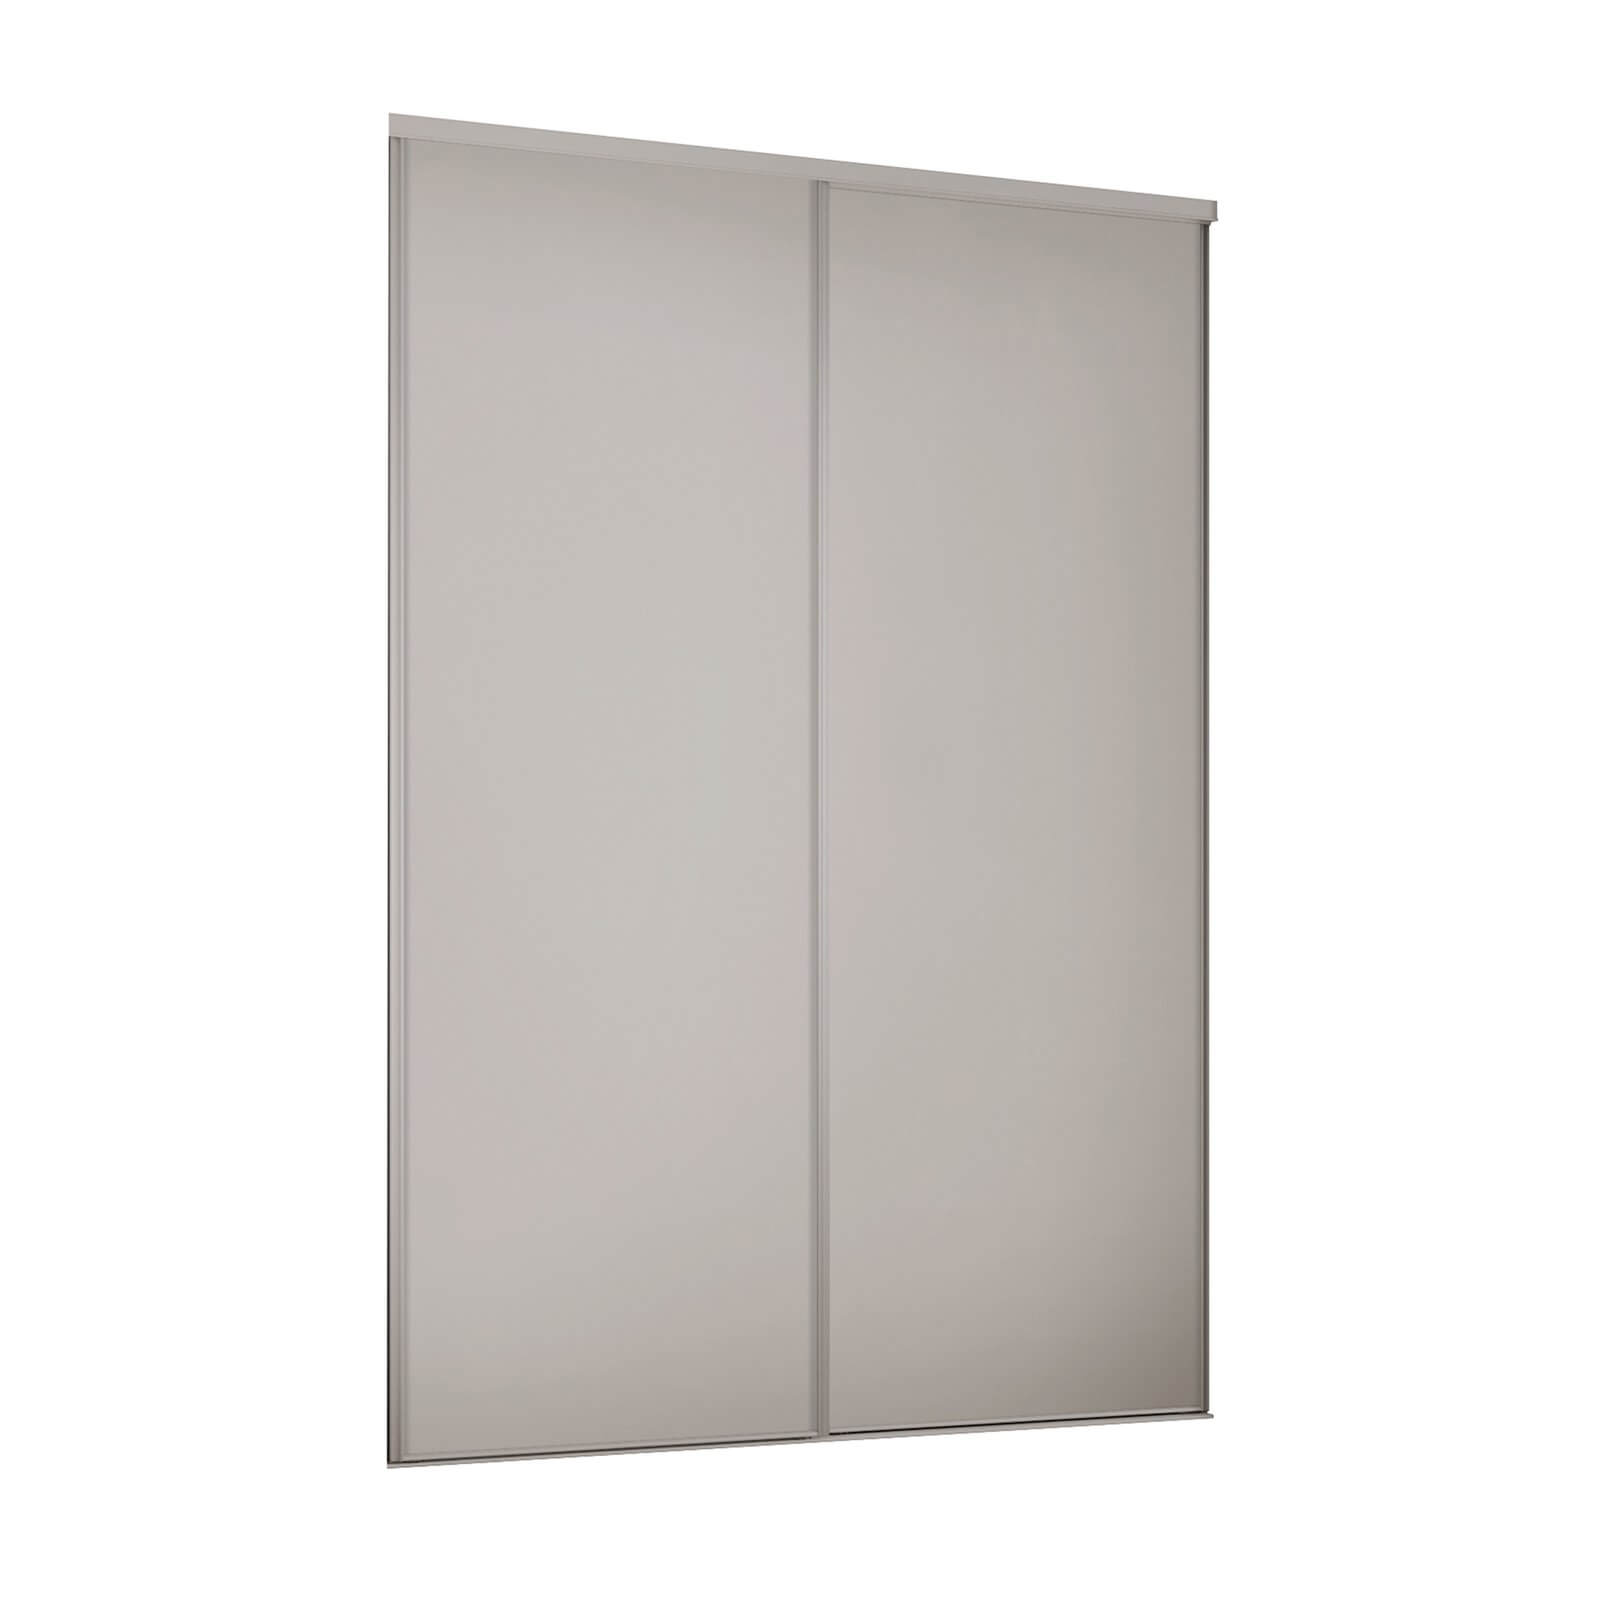 Photo of Classic 2 Door Sliding Wardrobe Kit Cashmere Panel -w-1185 X -h-2260mm